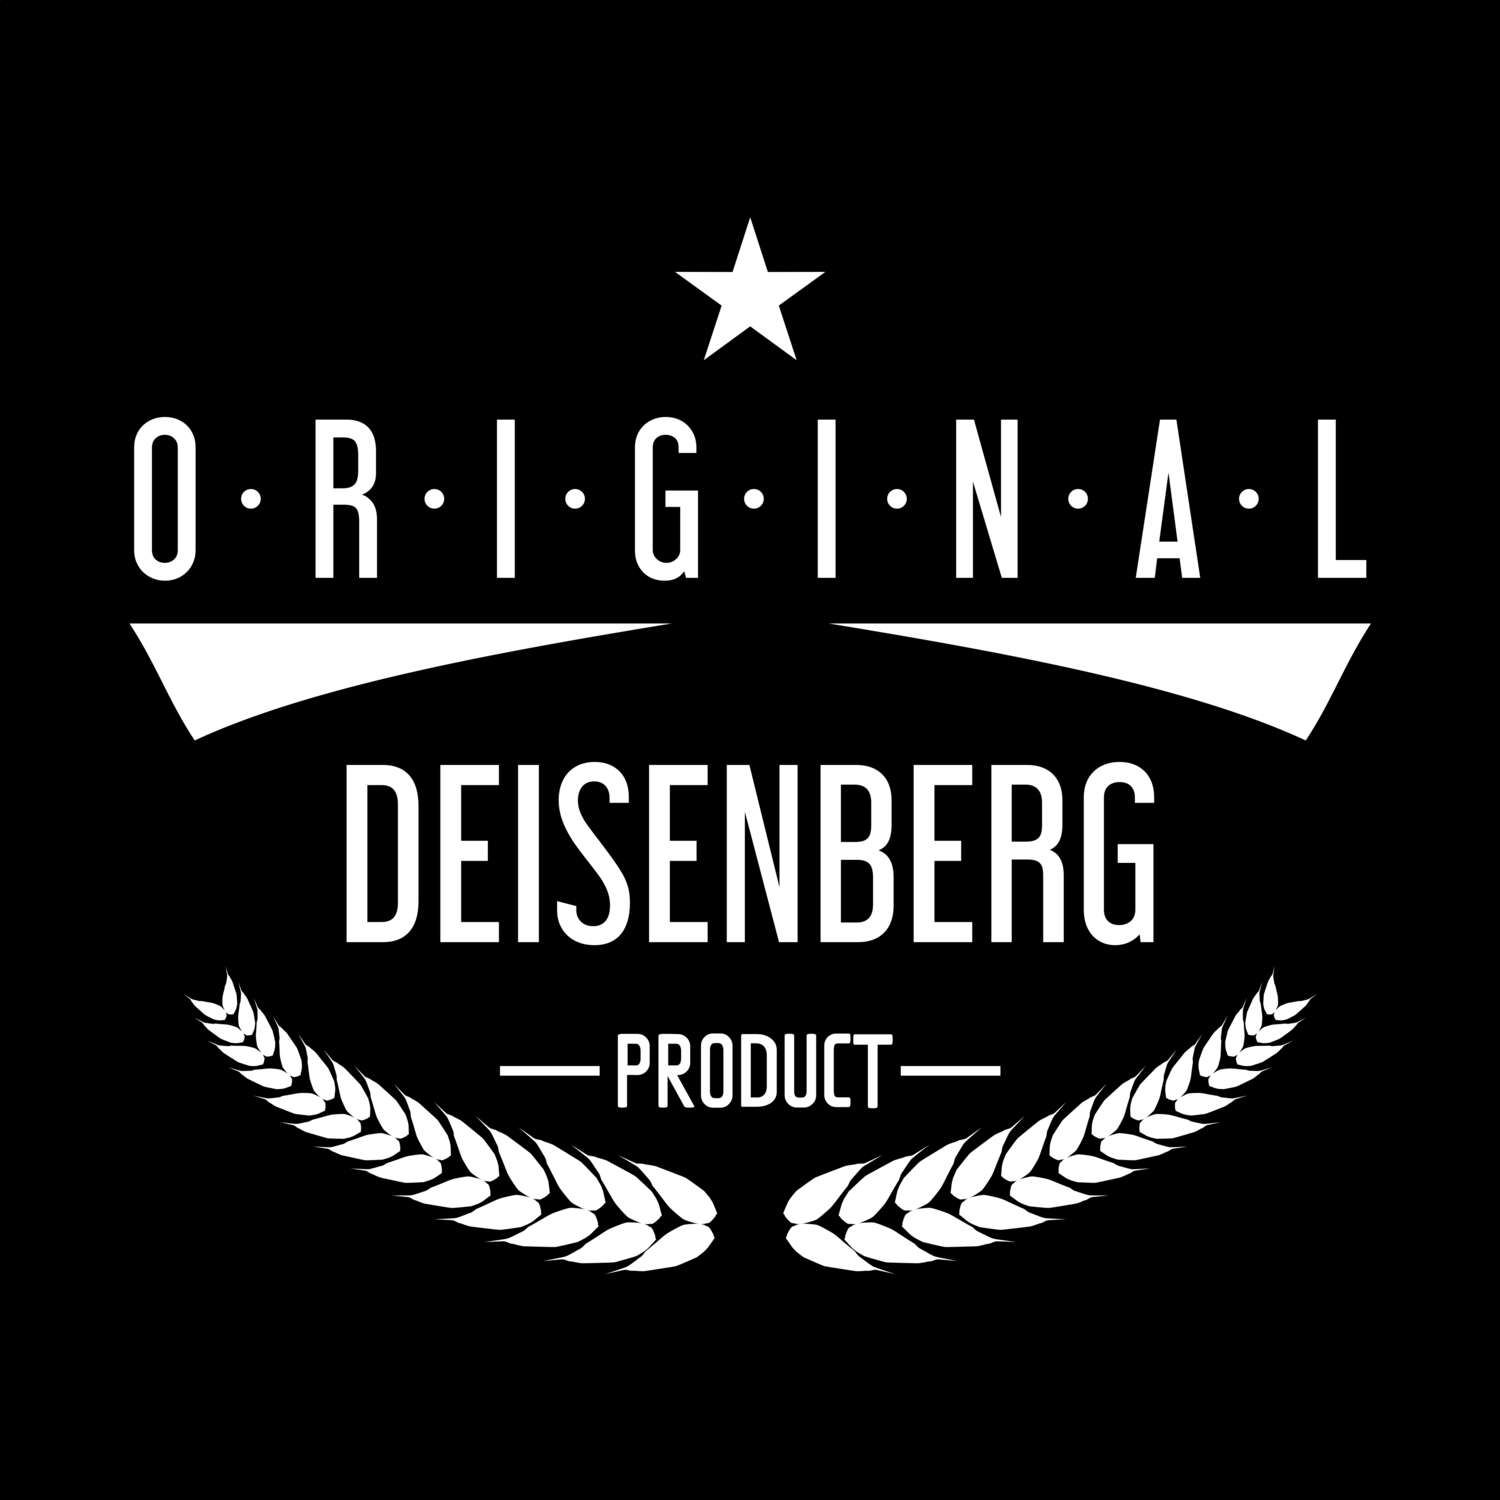 Deisenberg T-Shirt »Original Product«